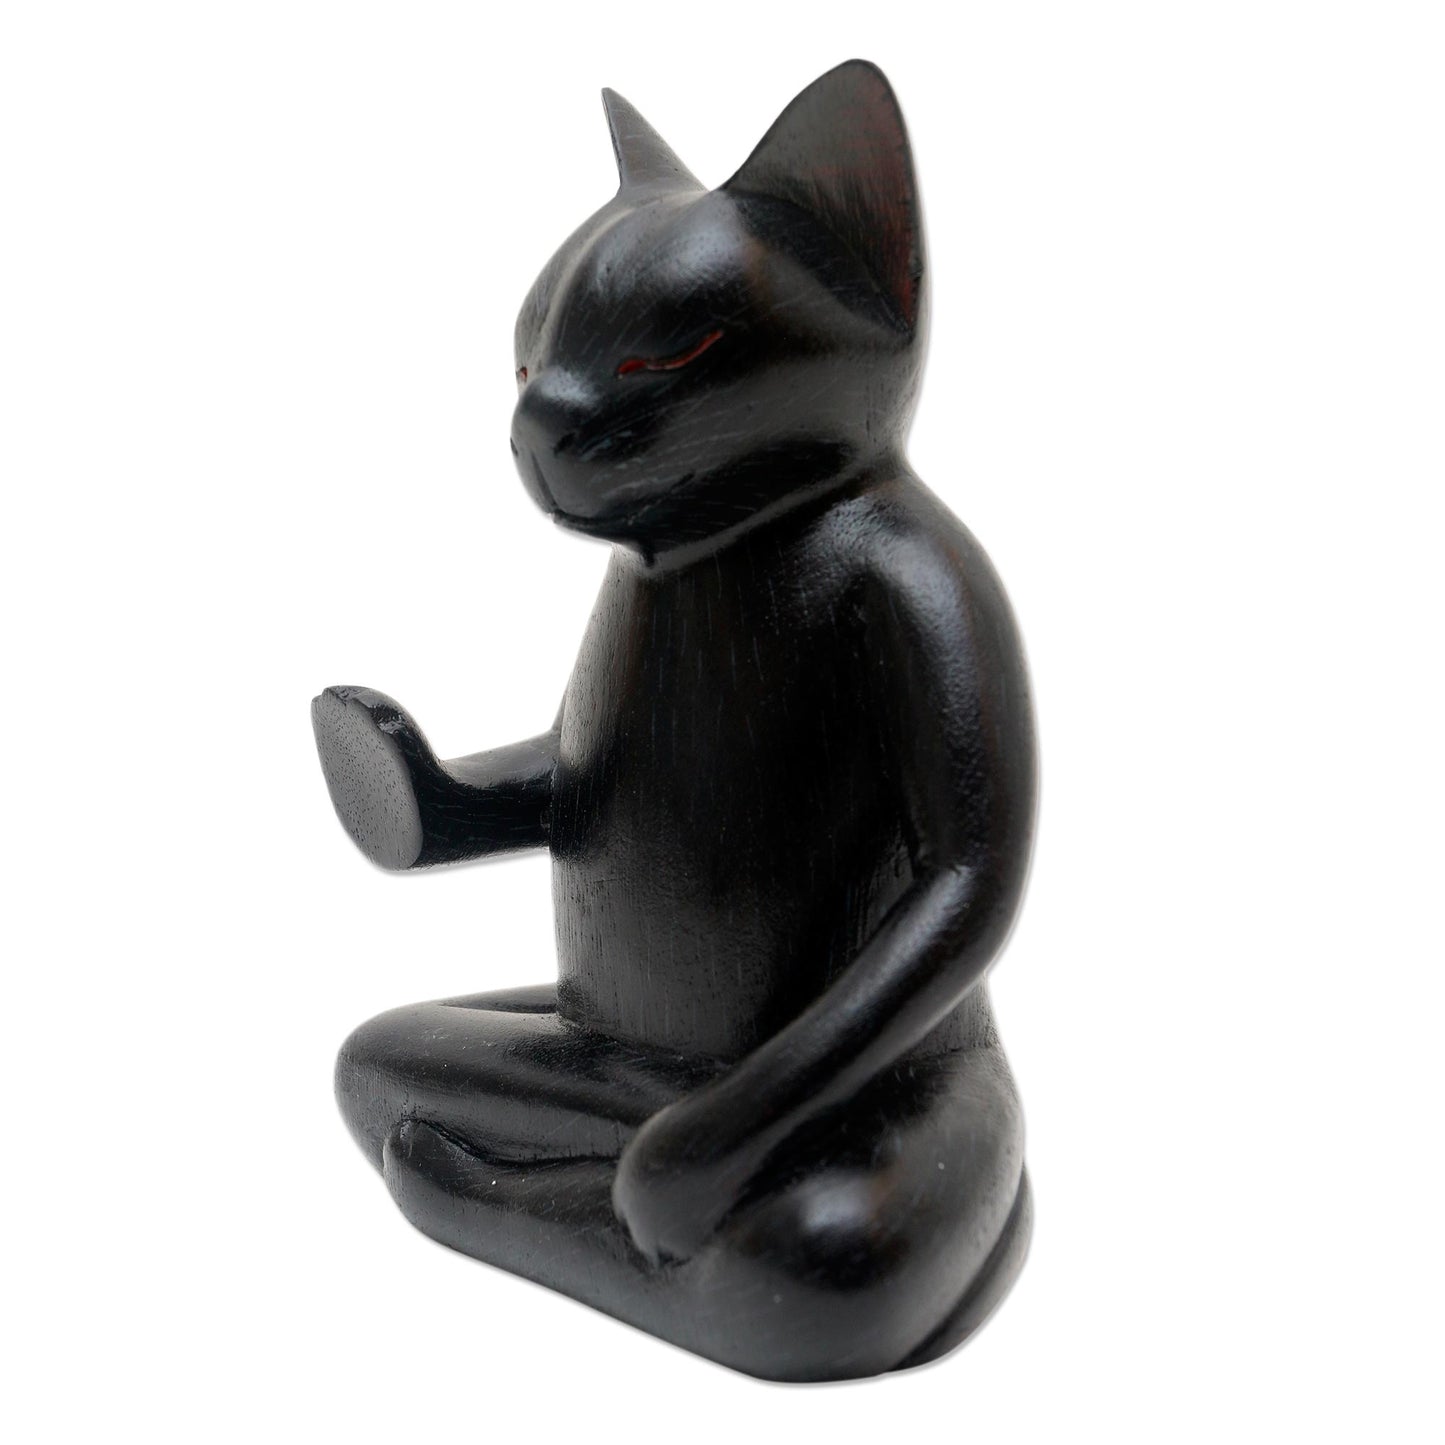 Black Cat Meditates Wood Statuette of Black Cat Meditating